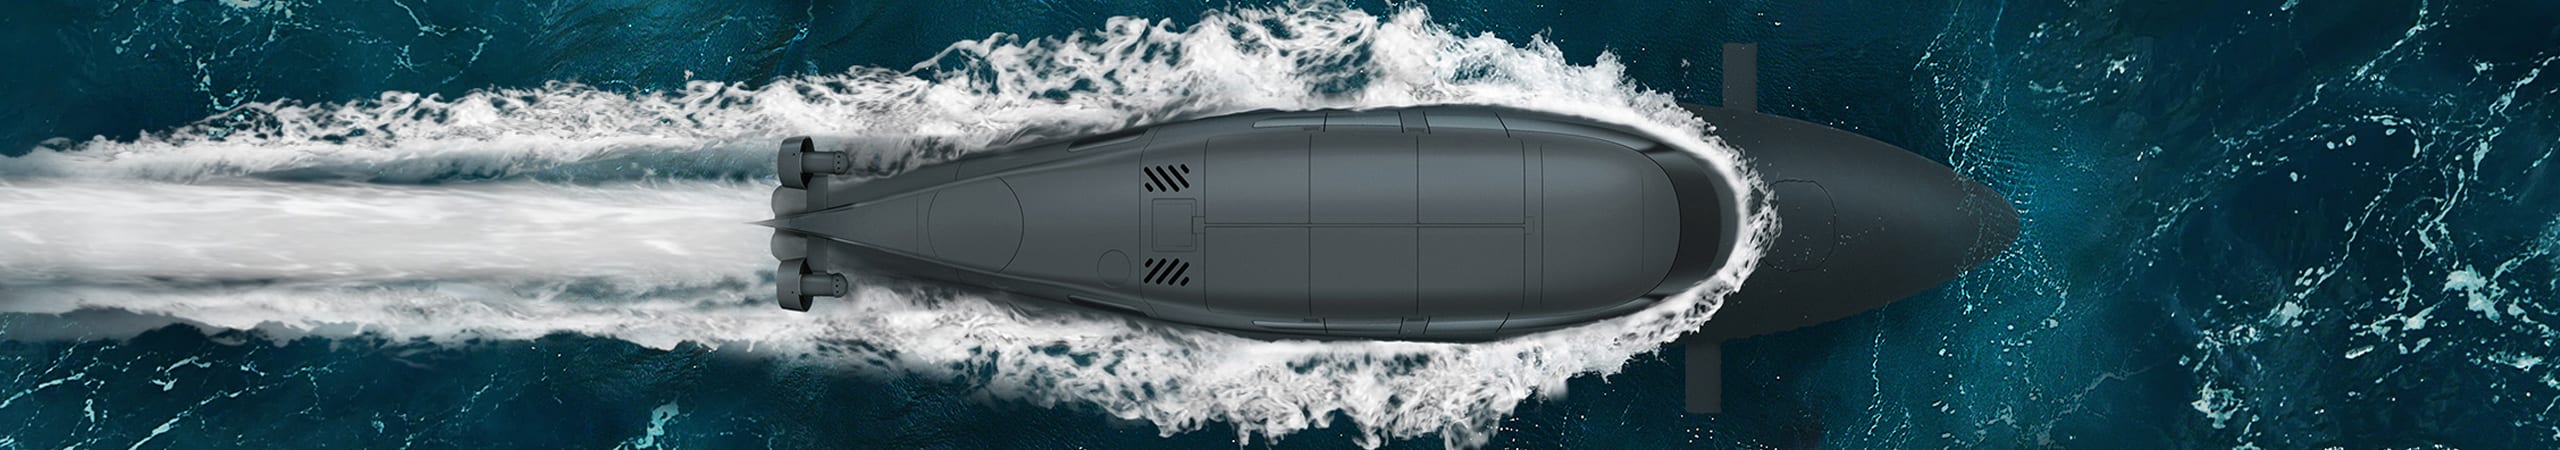 The Subsea craft submarine